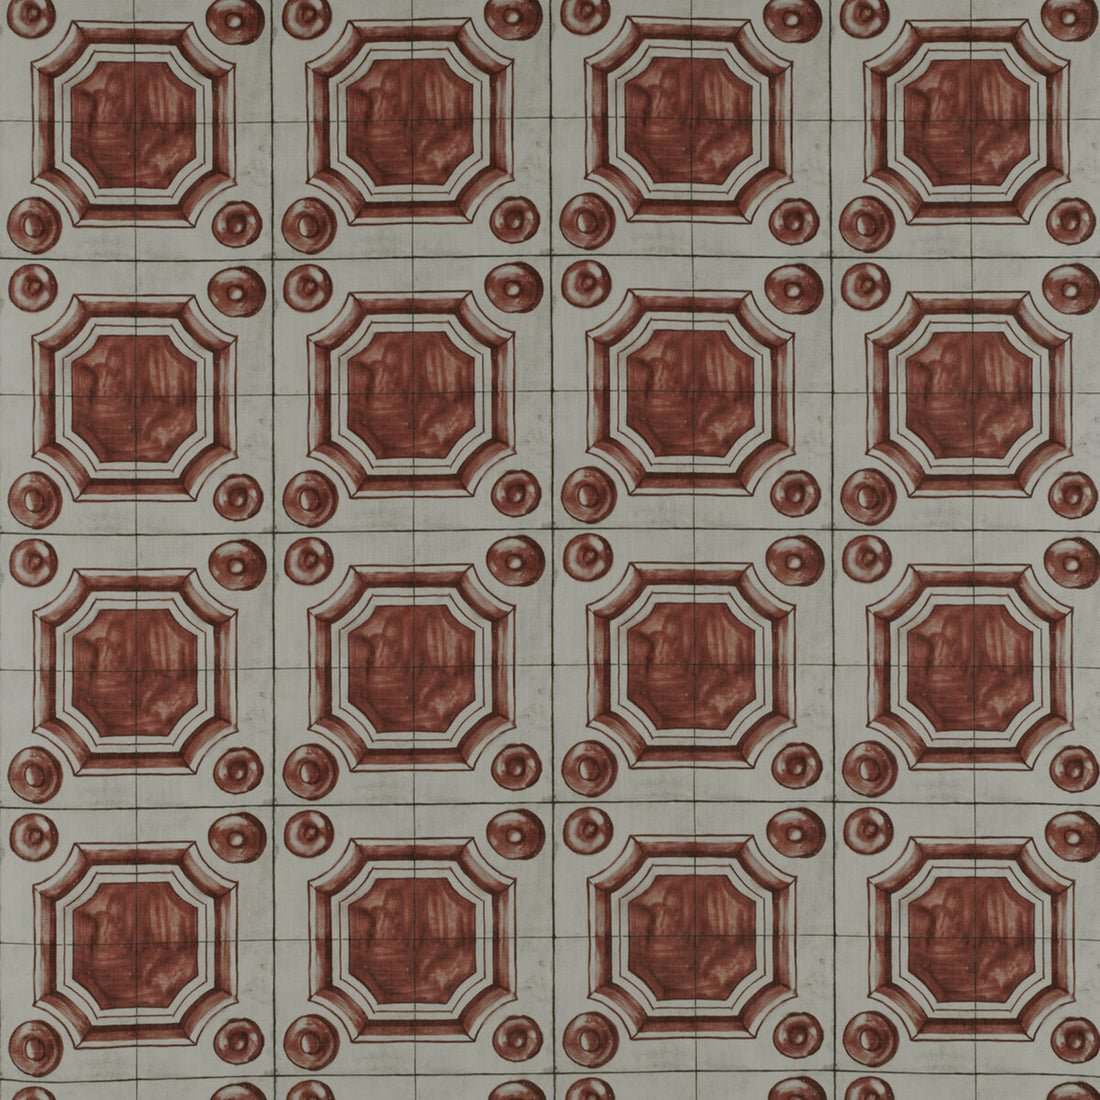 Celio fabric in rojo color - pattern GDT5333.003.0 - by Gaston y Daniela in the Tierras collection